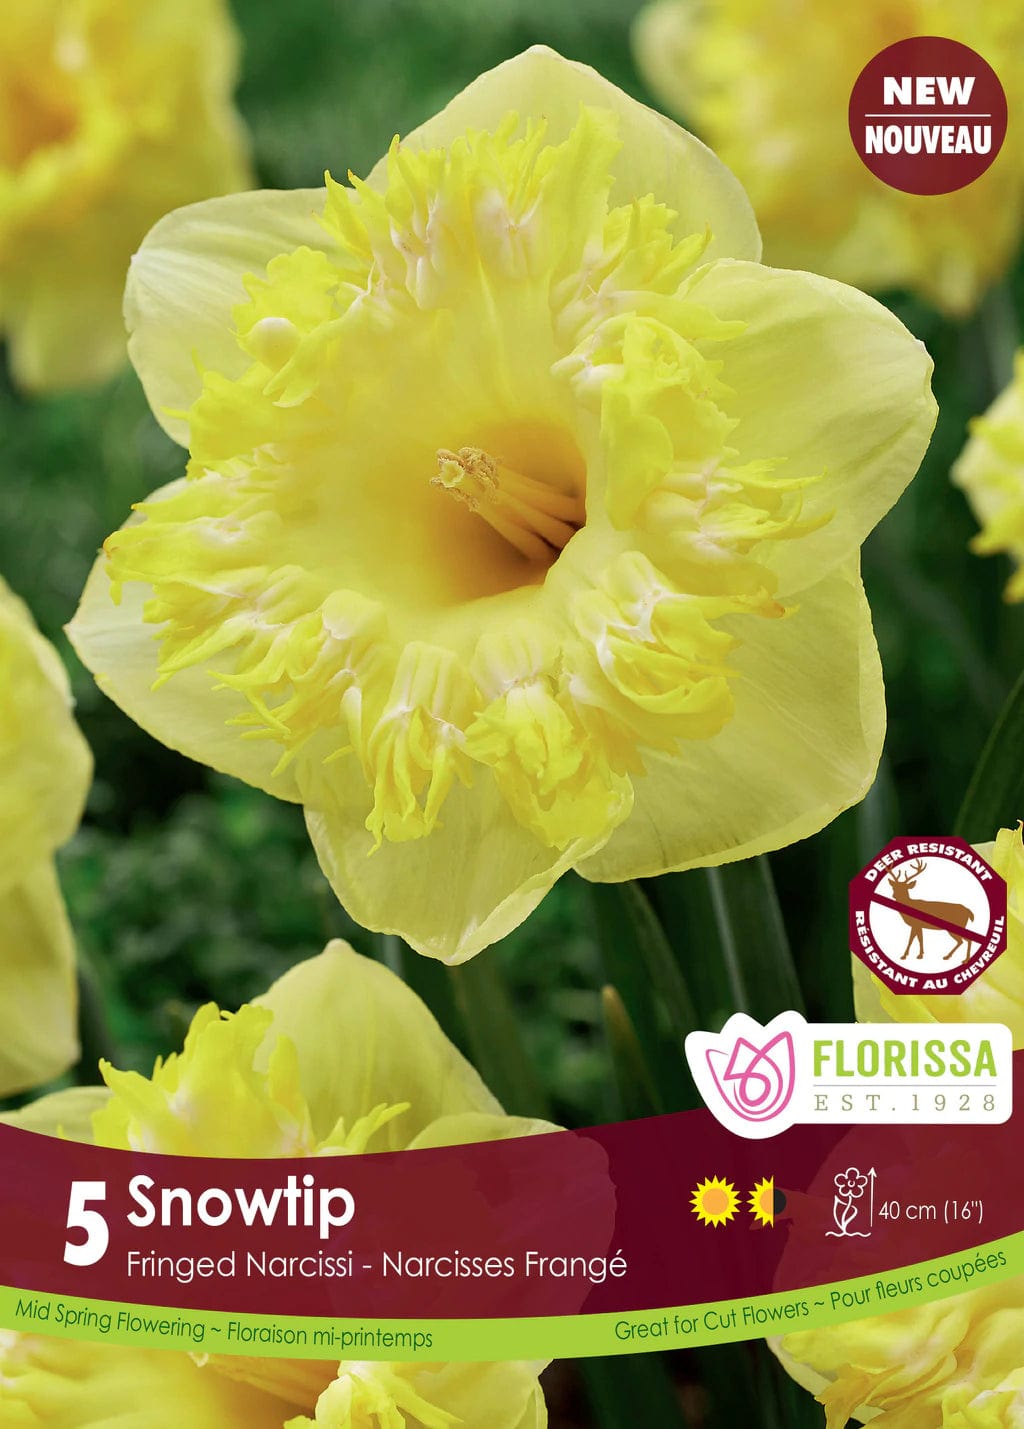 Narcissus - Snowtip, 5 Pack